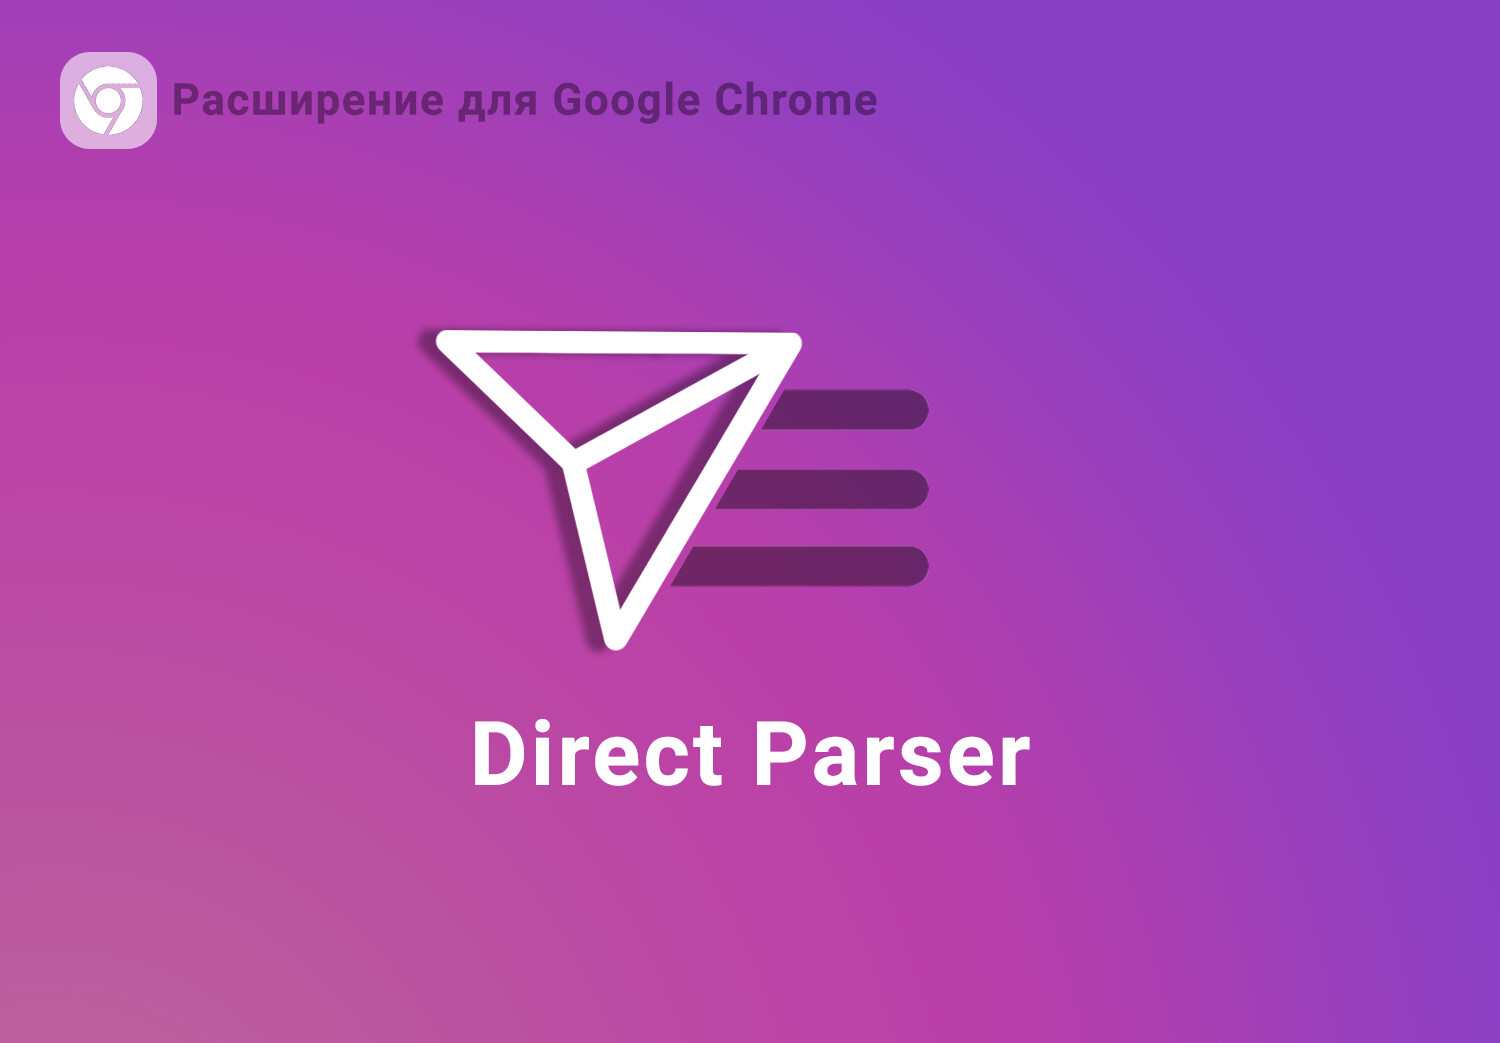 Direct Parser